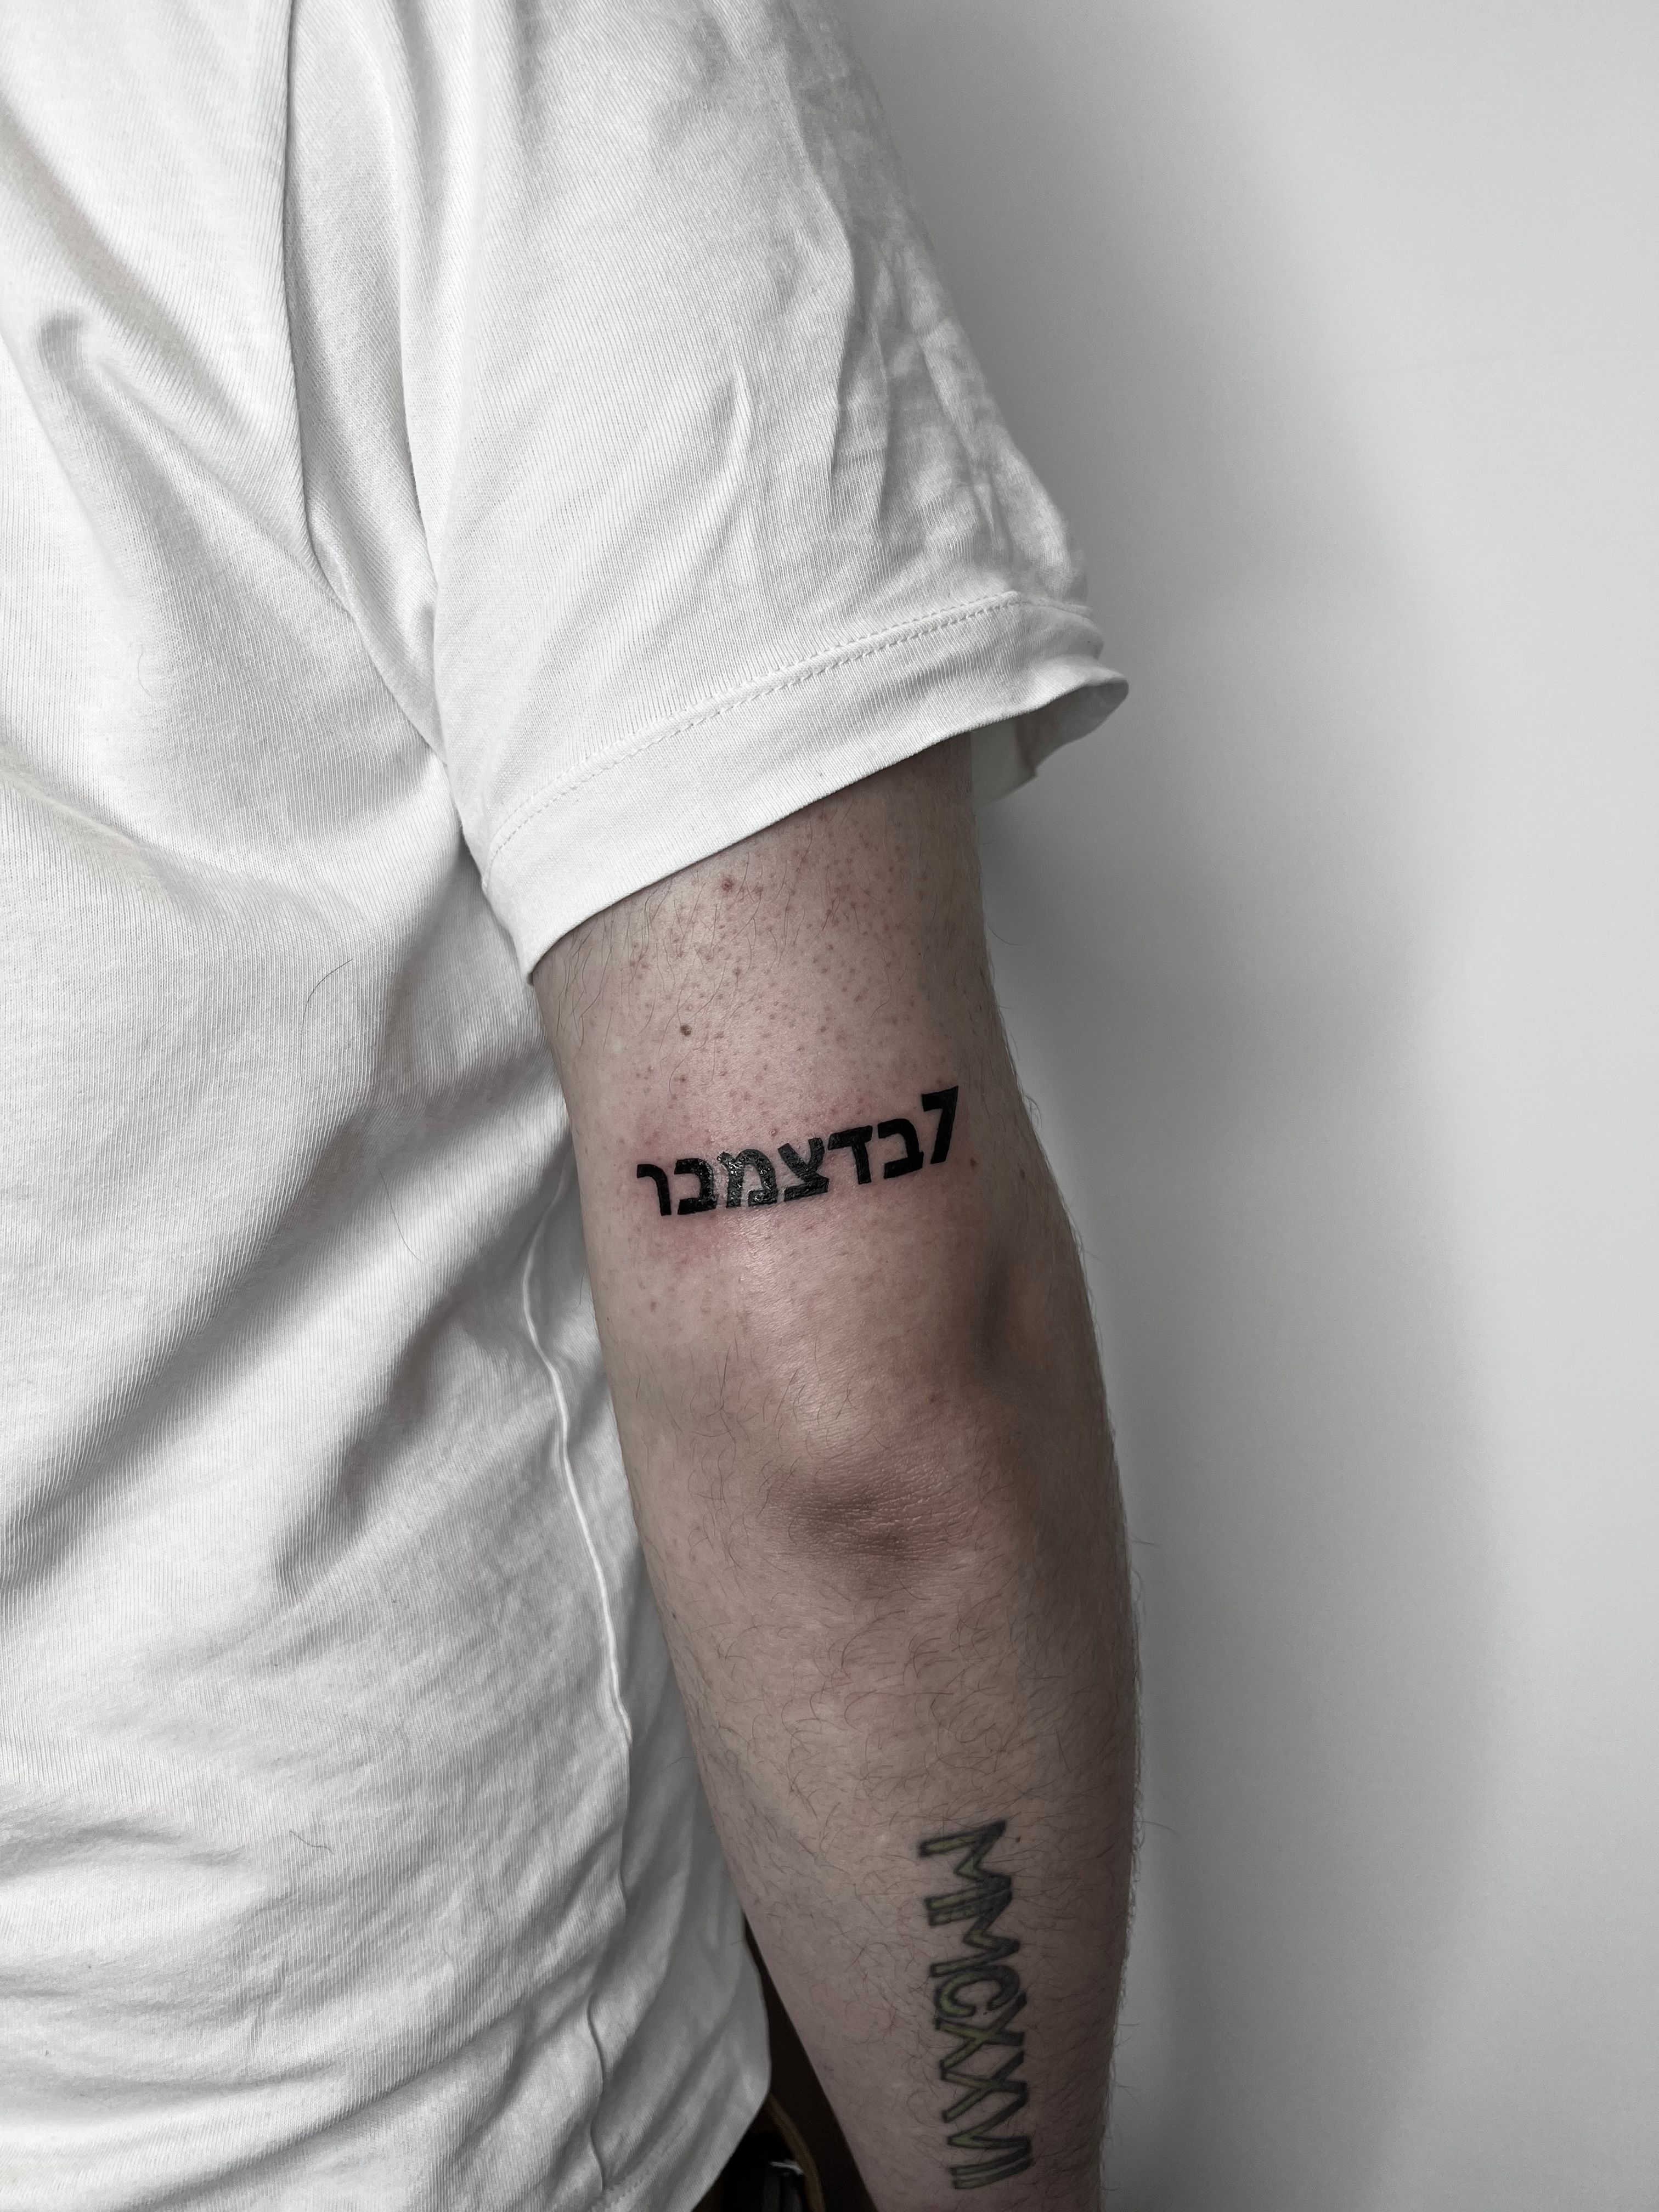 Hebrew Tattoos - YouTube